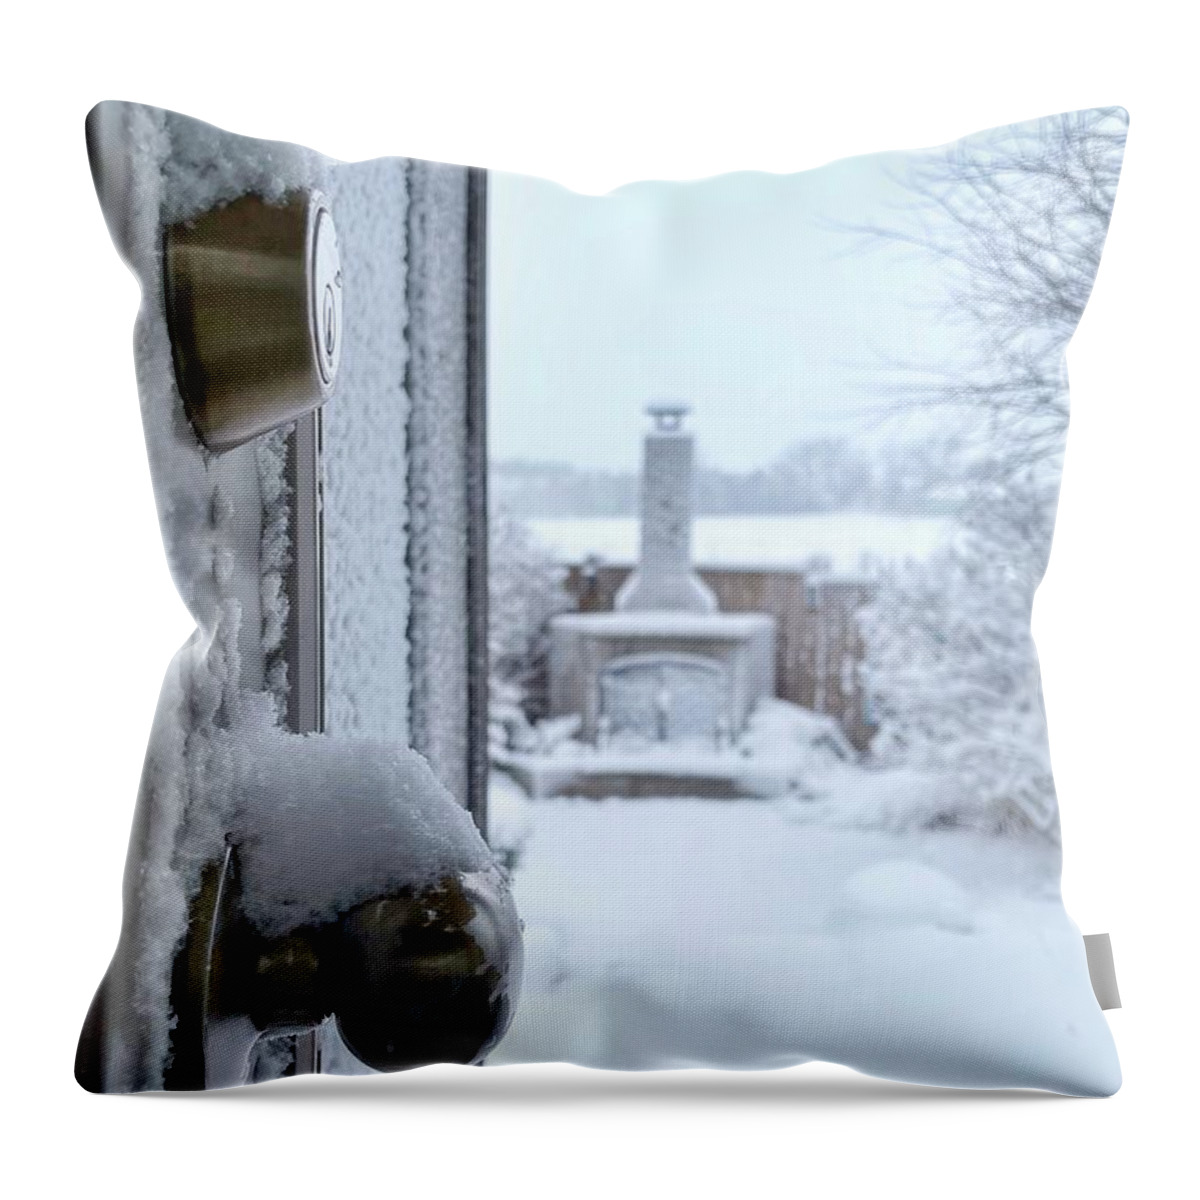 Snow Throw Pillow featuring the photograph Snowfall by Diana Rajala